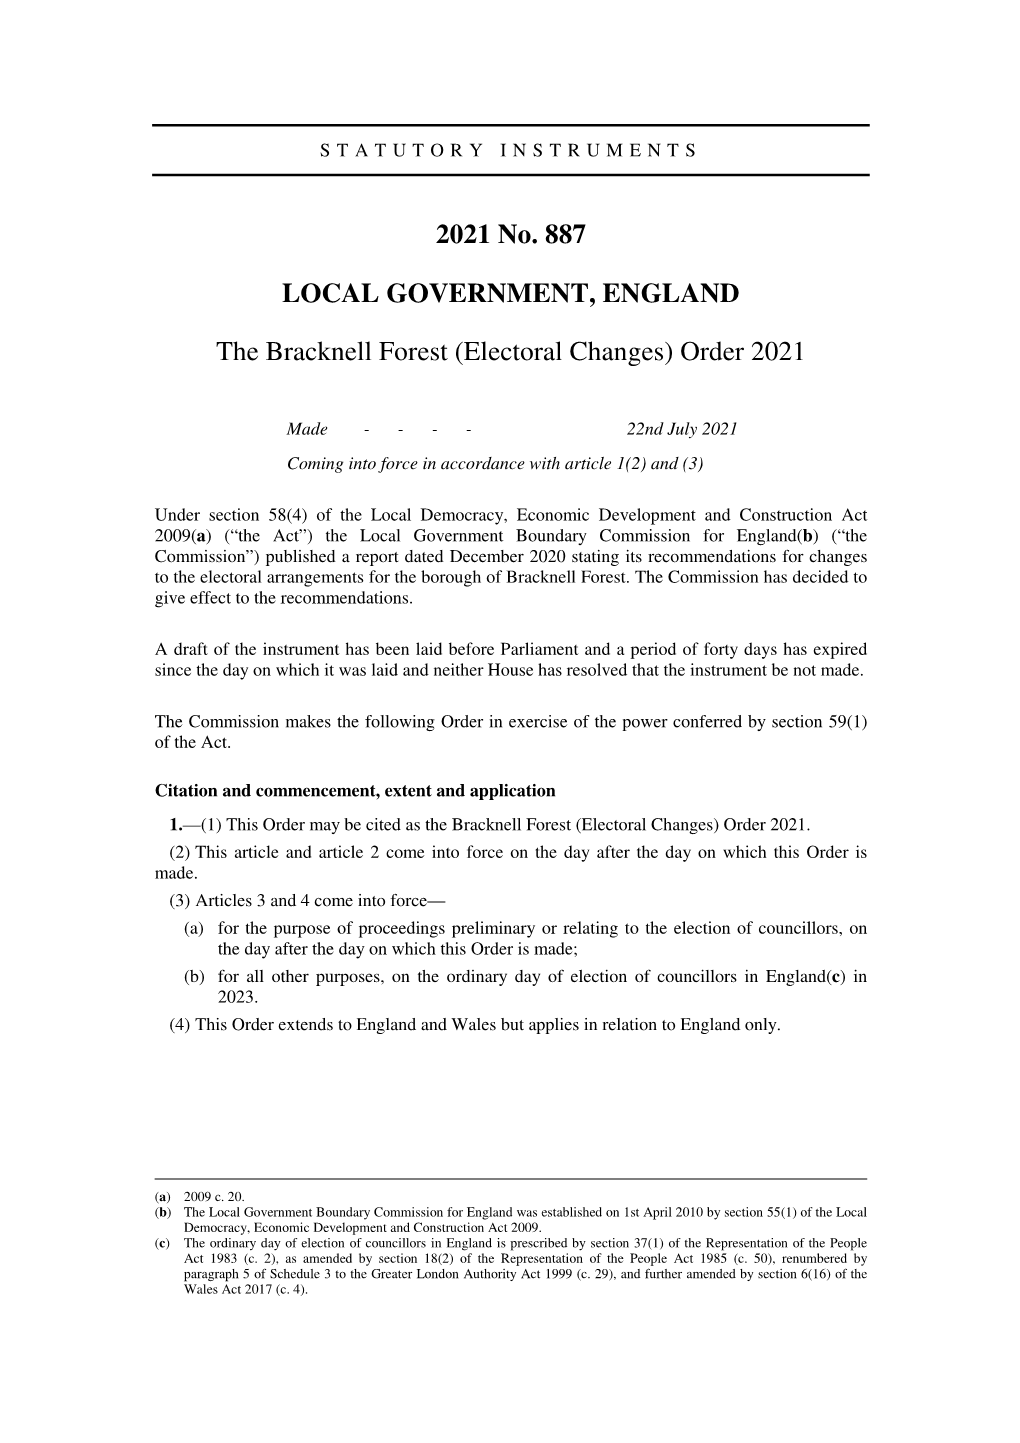 The Bracknell Forest (Electoral Changes) Order 2021